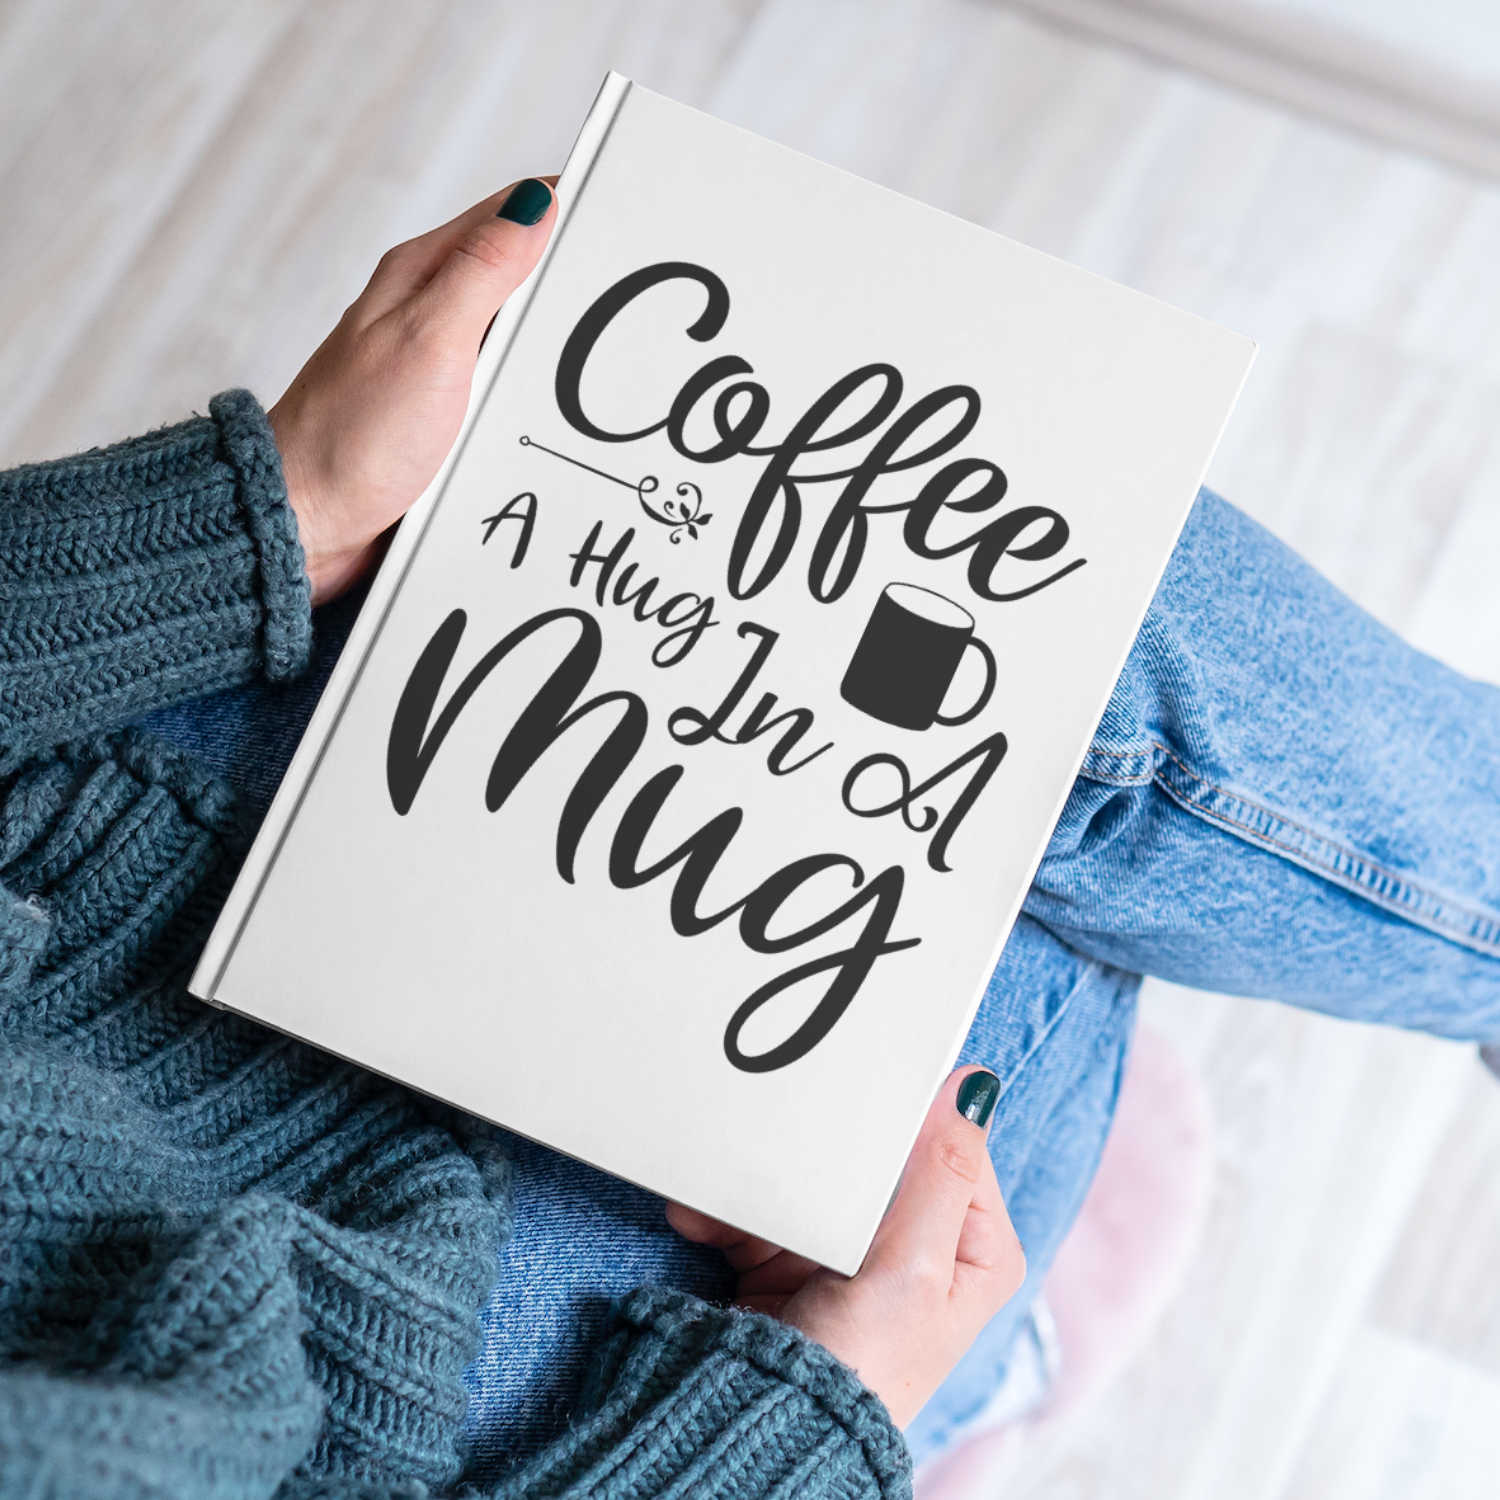 Coffee A Hug In A Mug SVG | Digital Download | Cut File | SVG